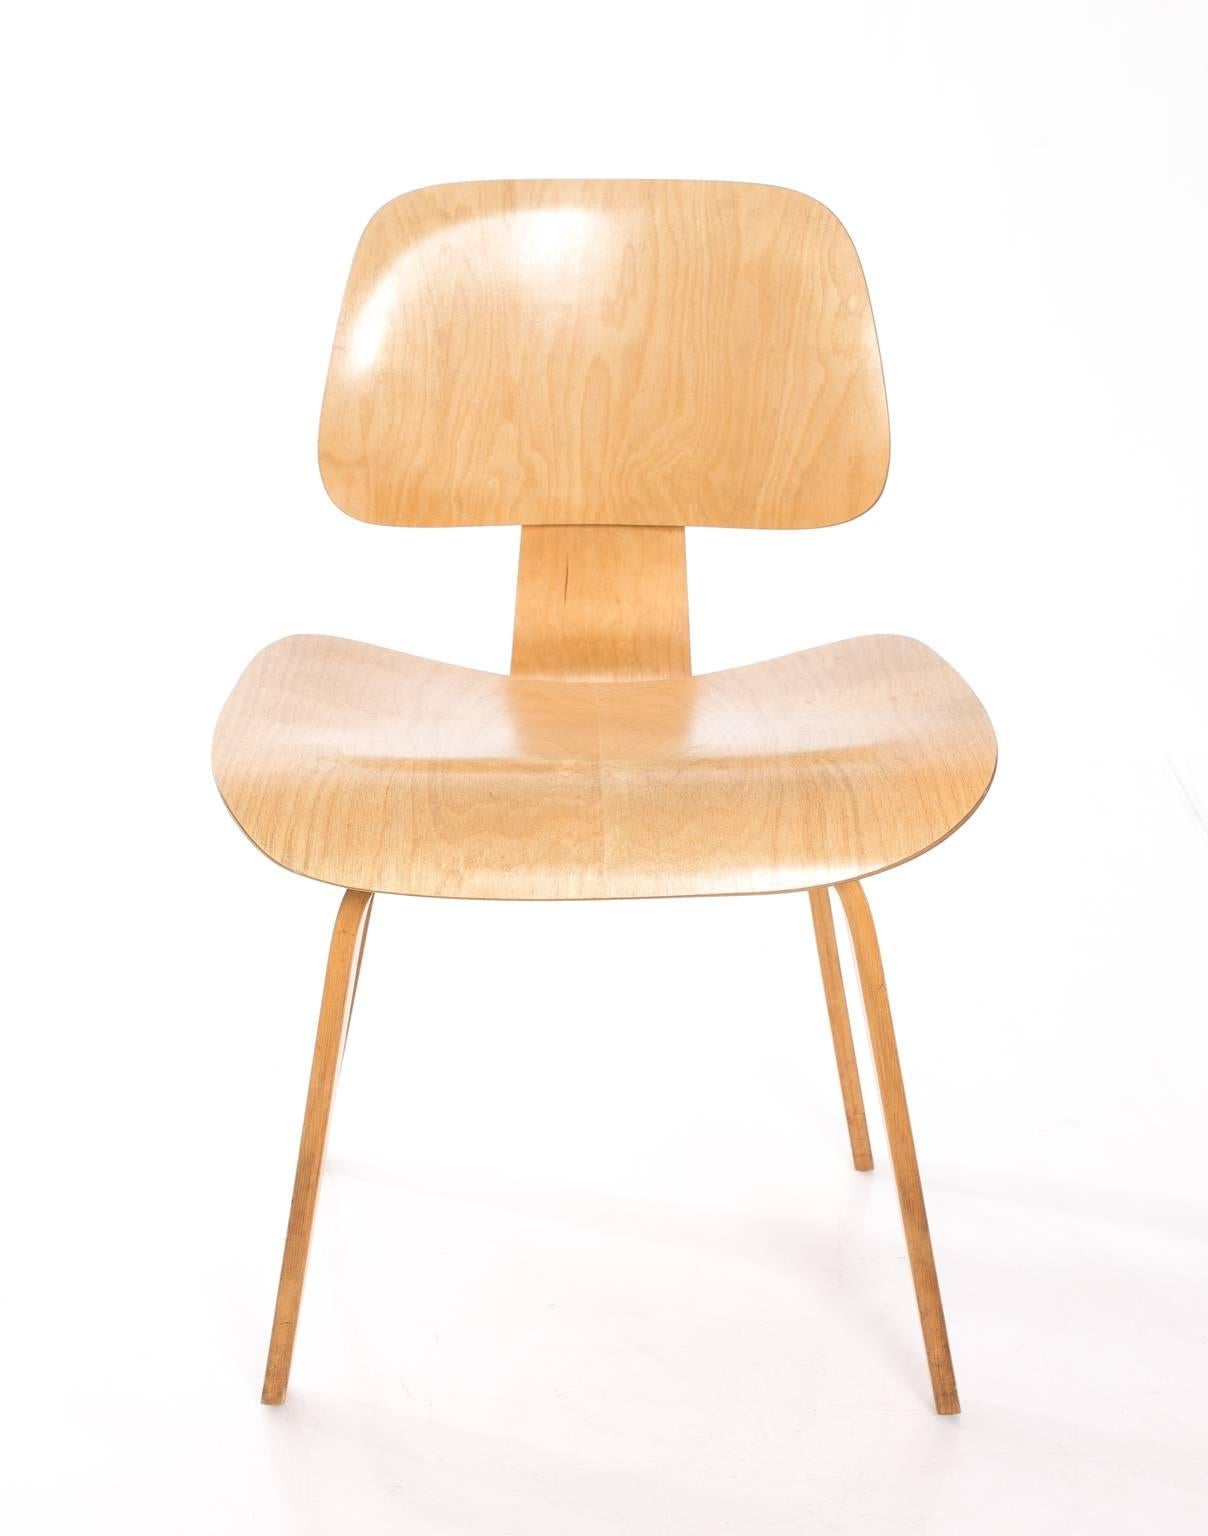 Original Eames LCW chair, circa 1960s.